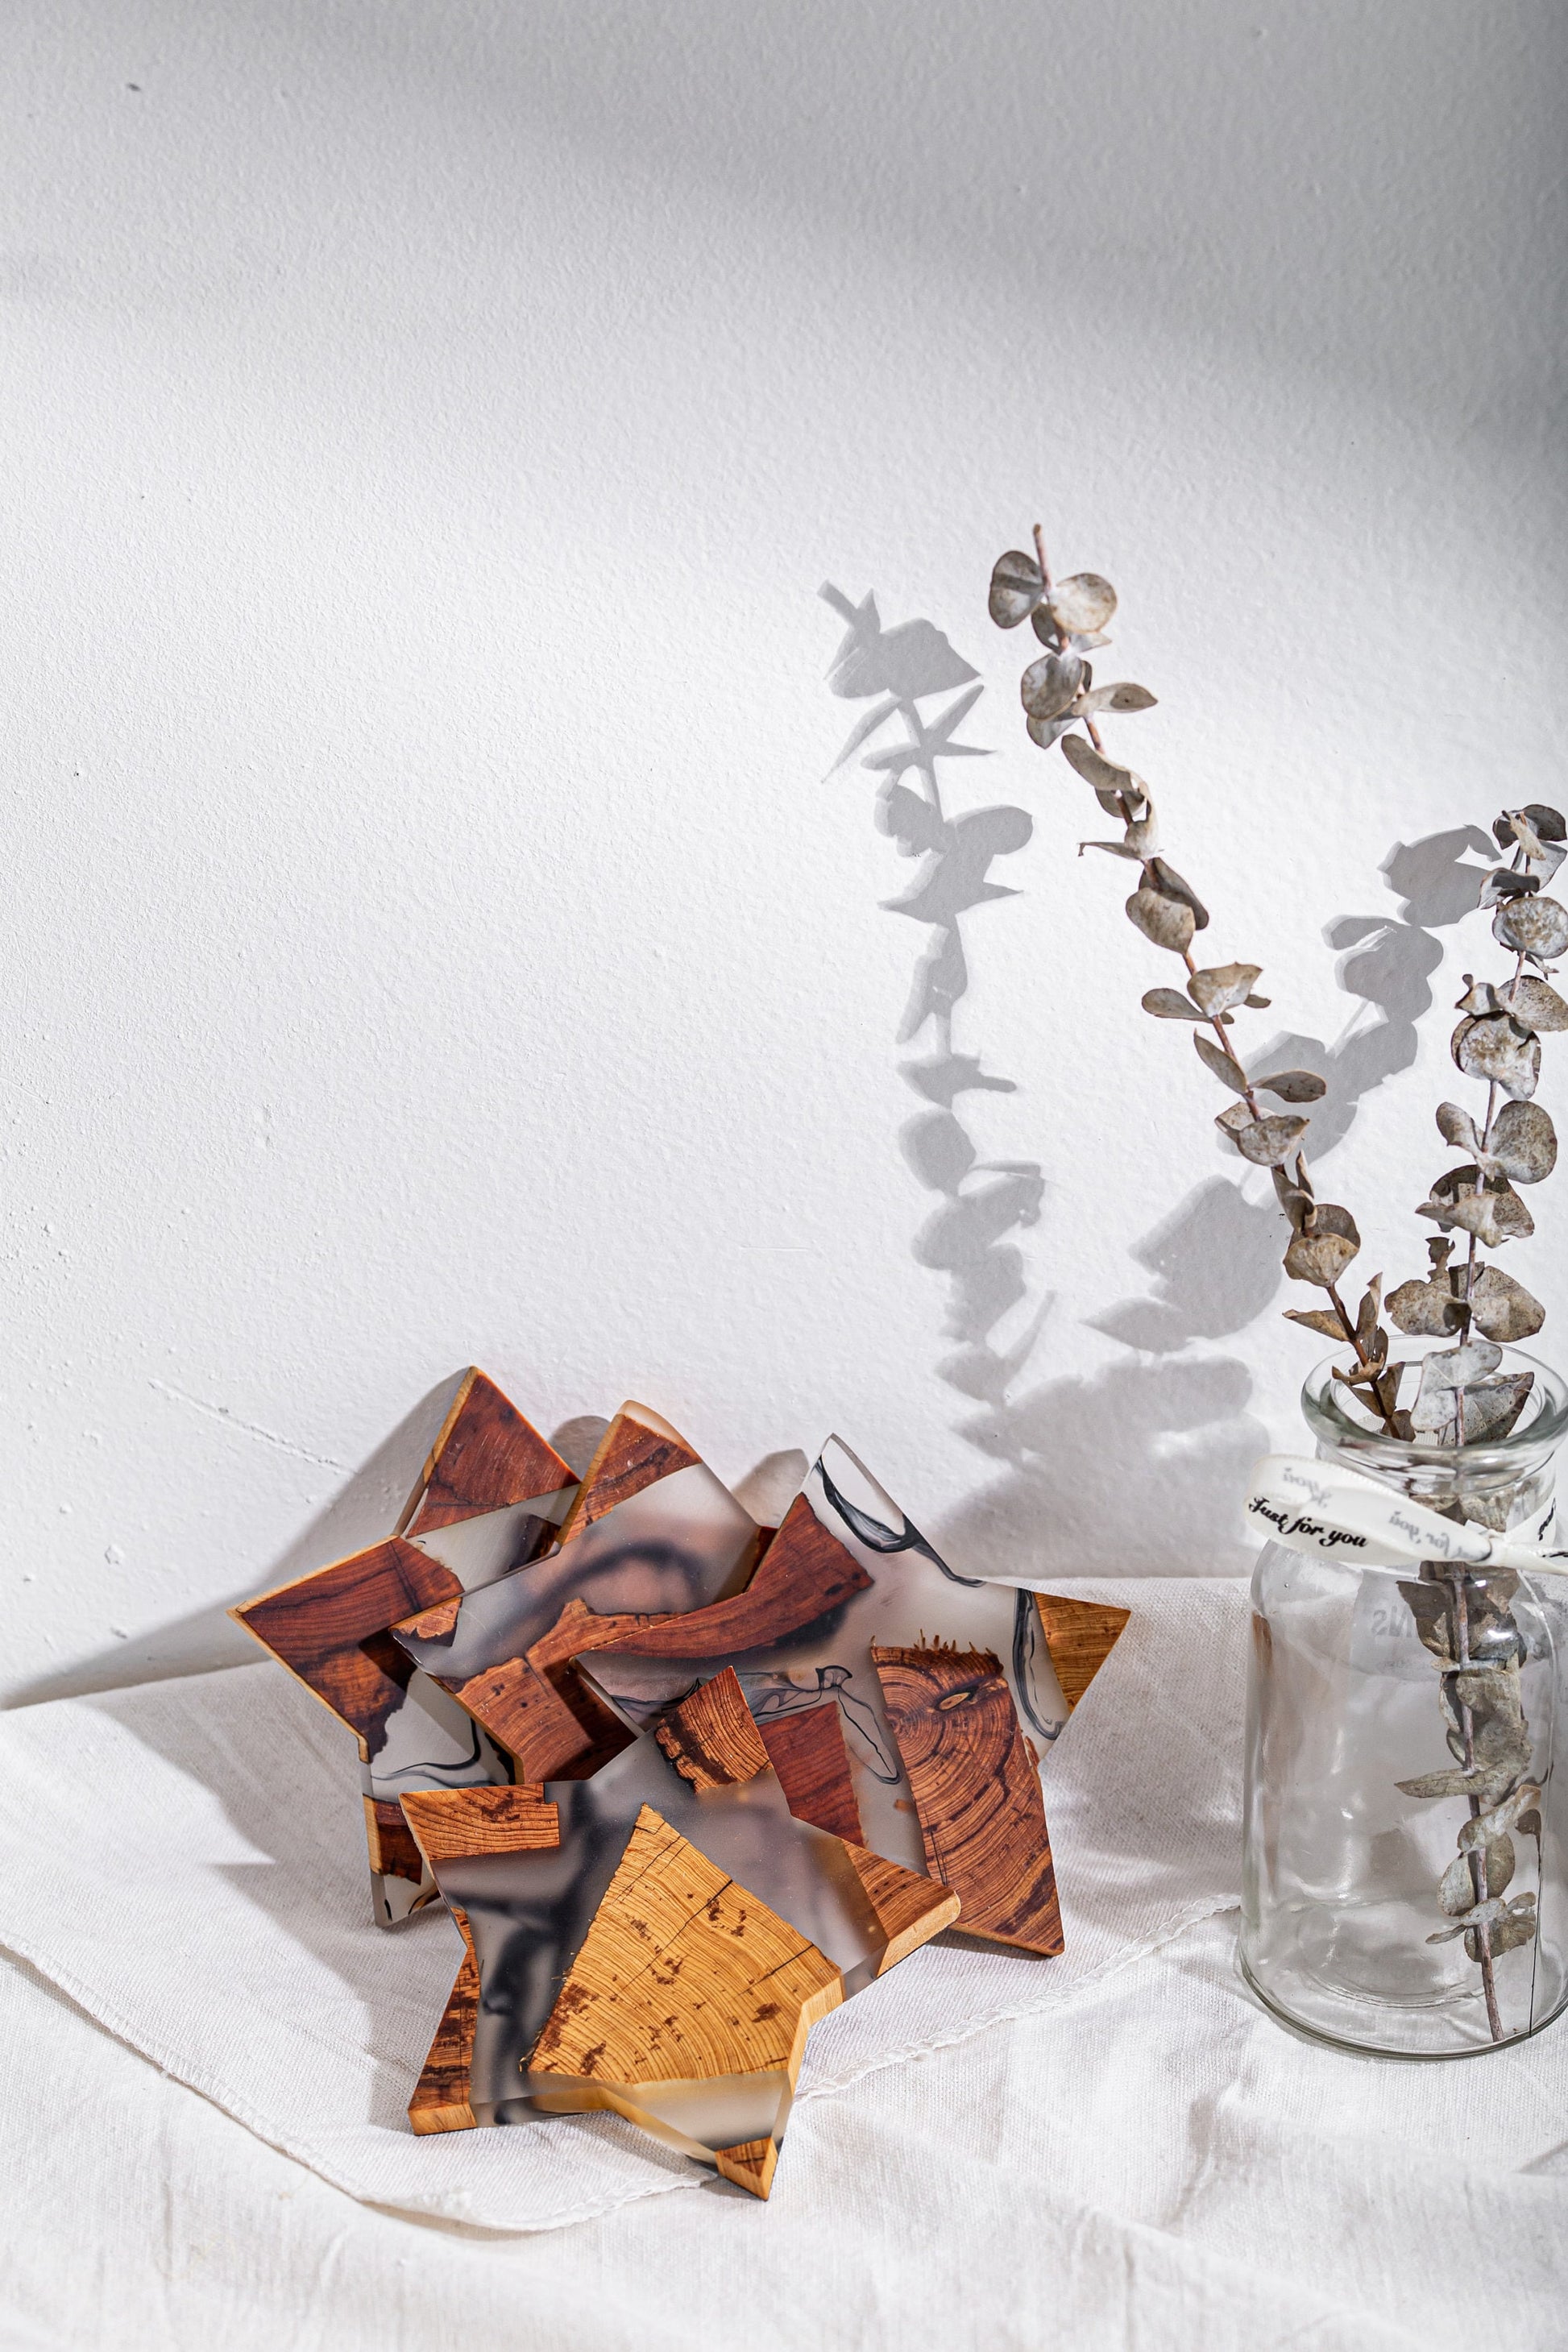 Gohobi Star shaped coasters wooden resin coaster placemats handmade gift set for festival christmas